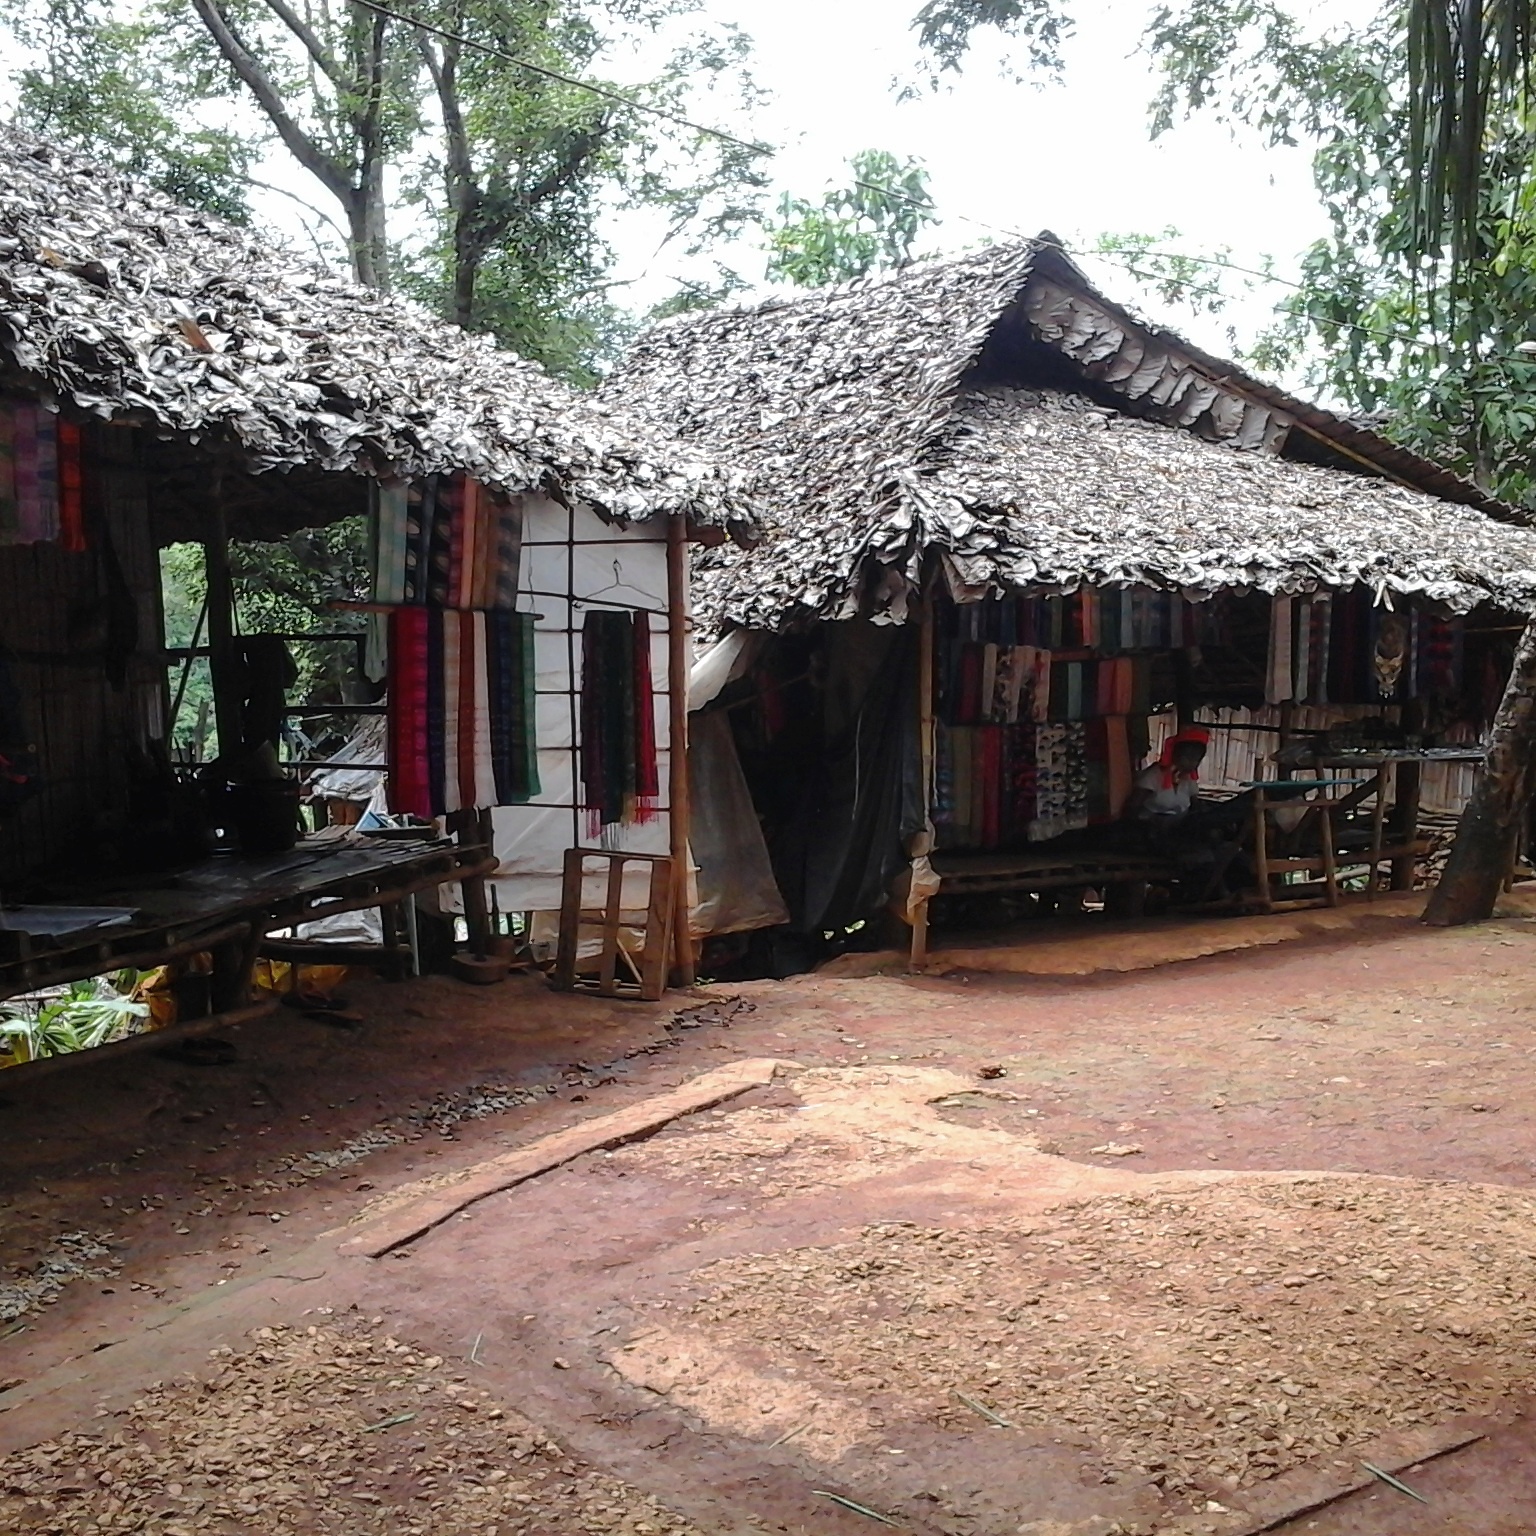  5 Hill Tribe Village in Chiang Rai